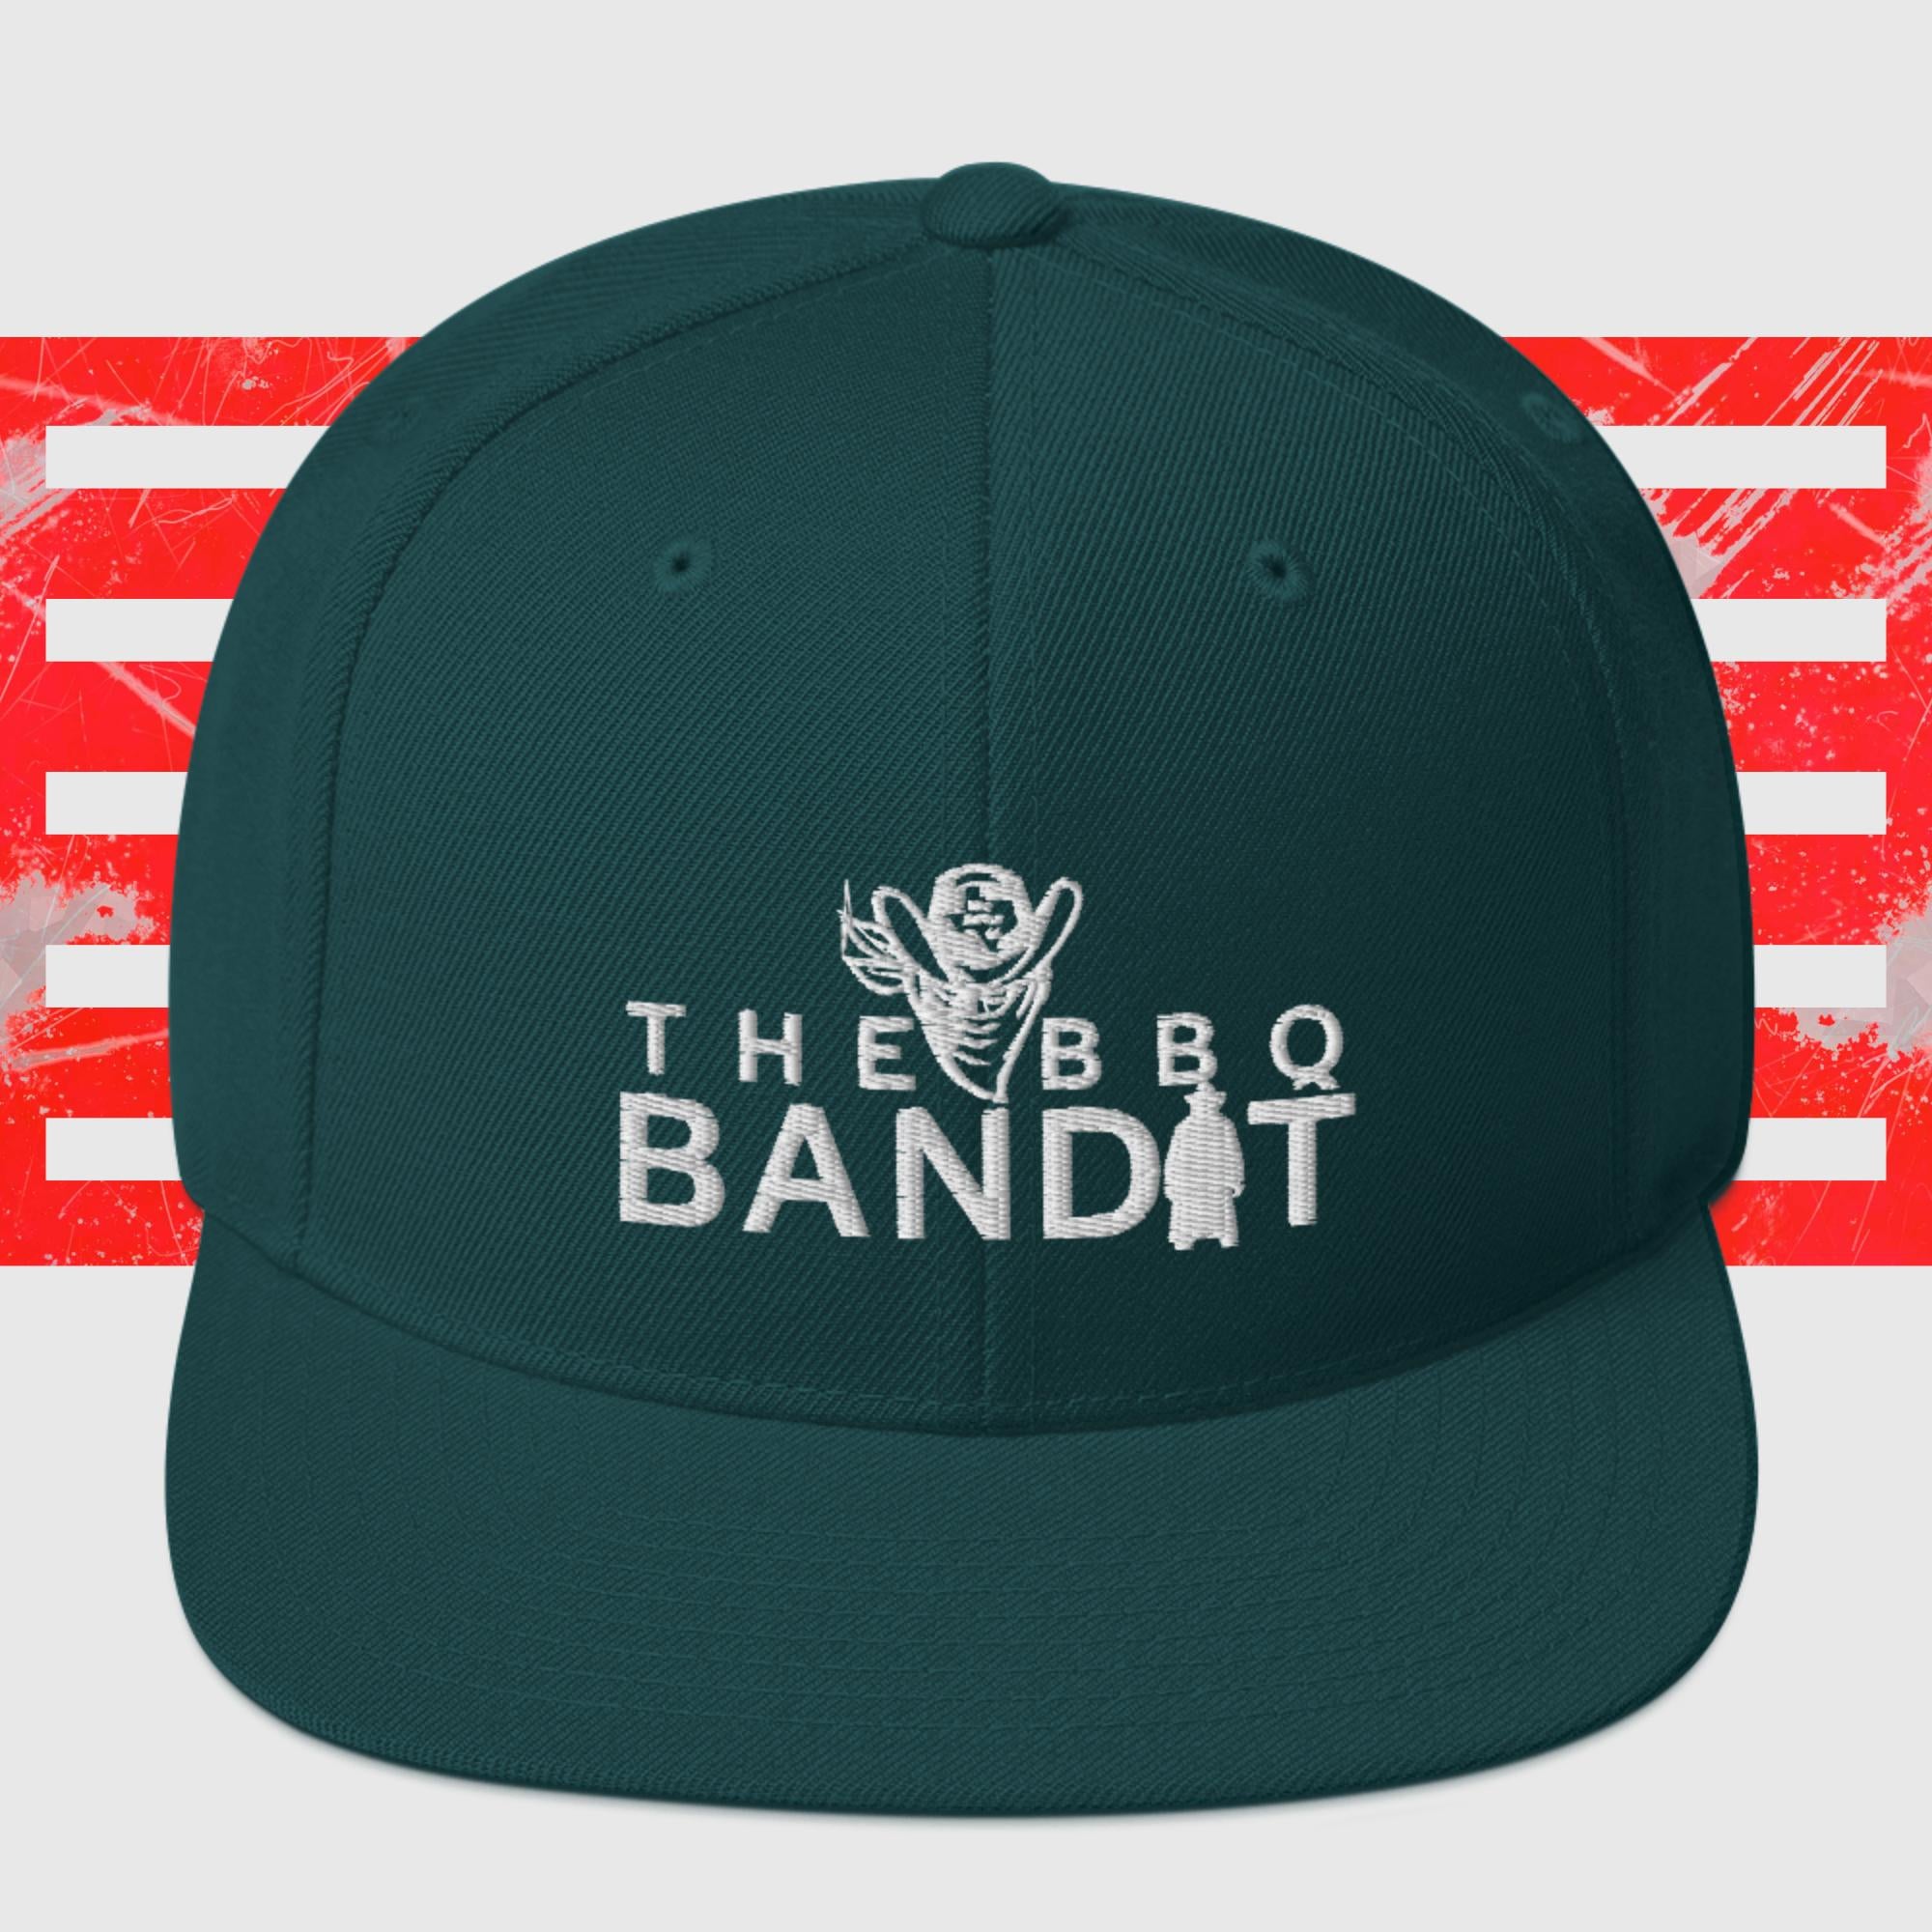 THE BBQ BANDIT HAT